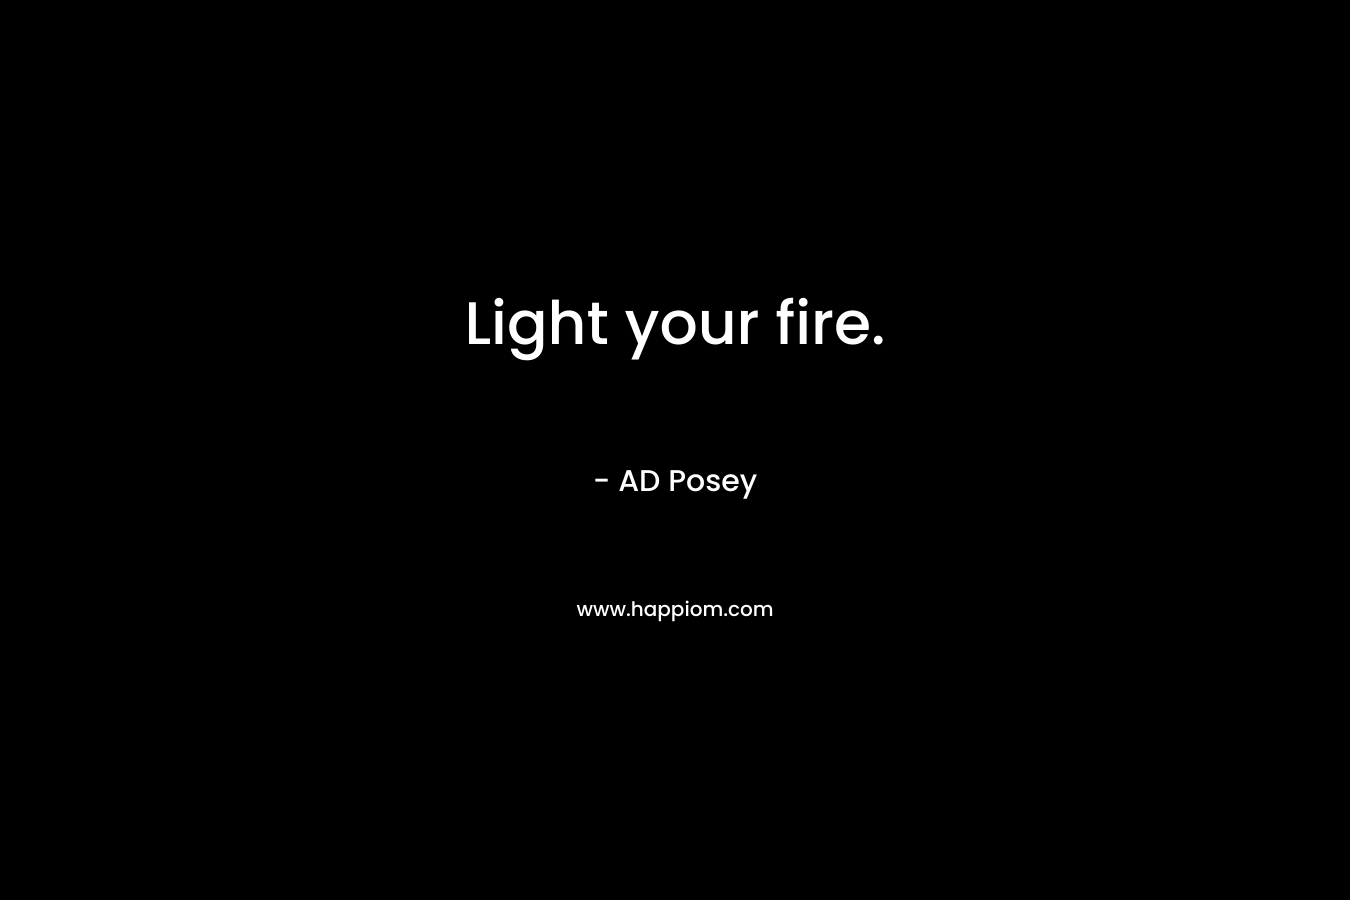 Light your fire.